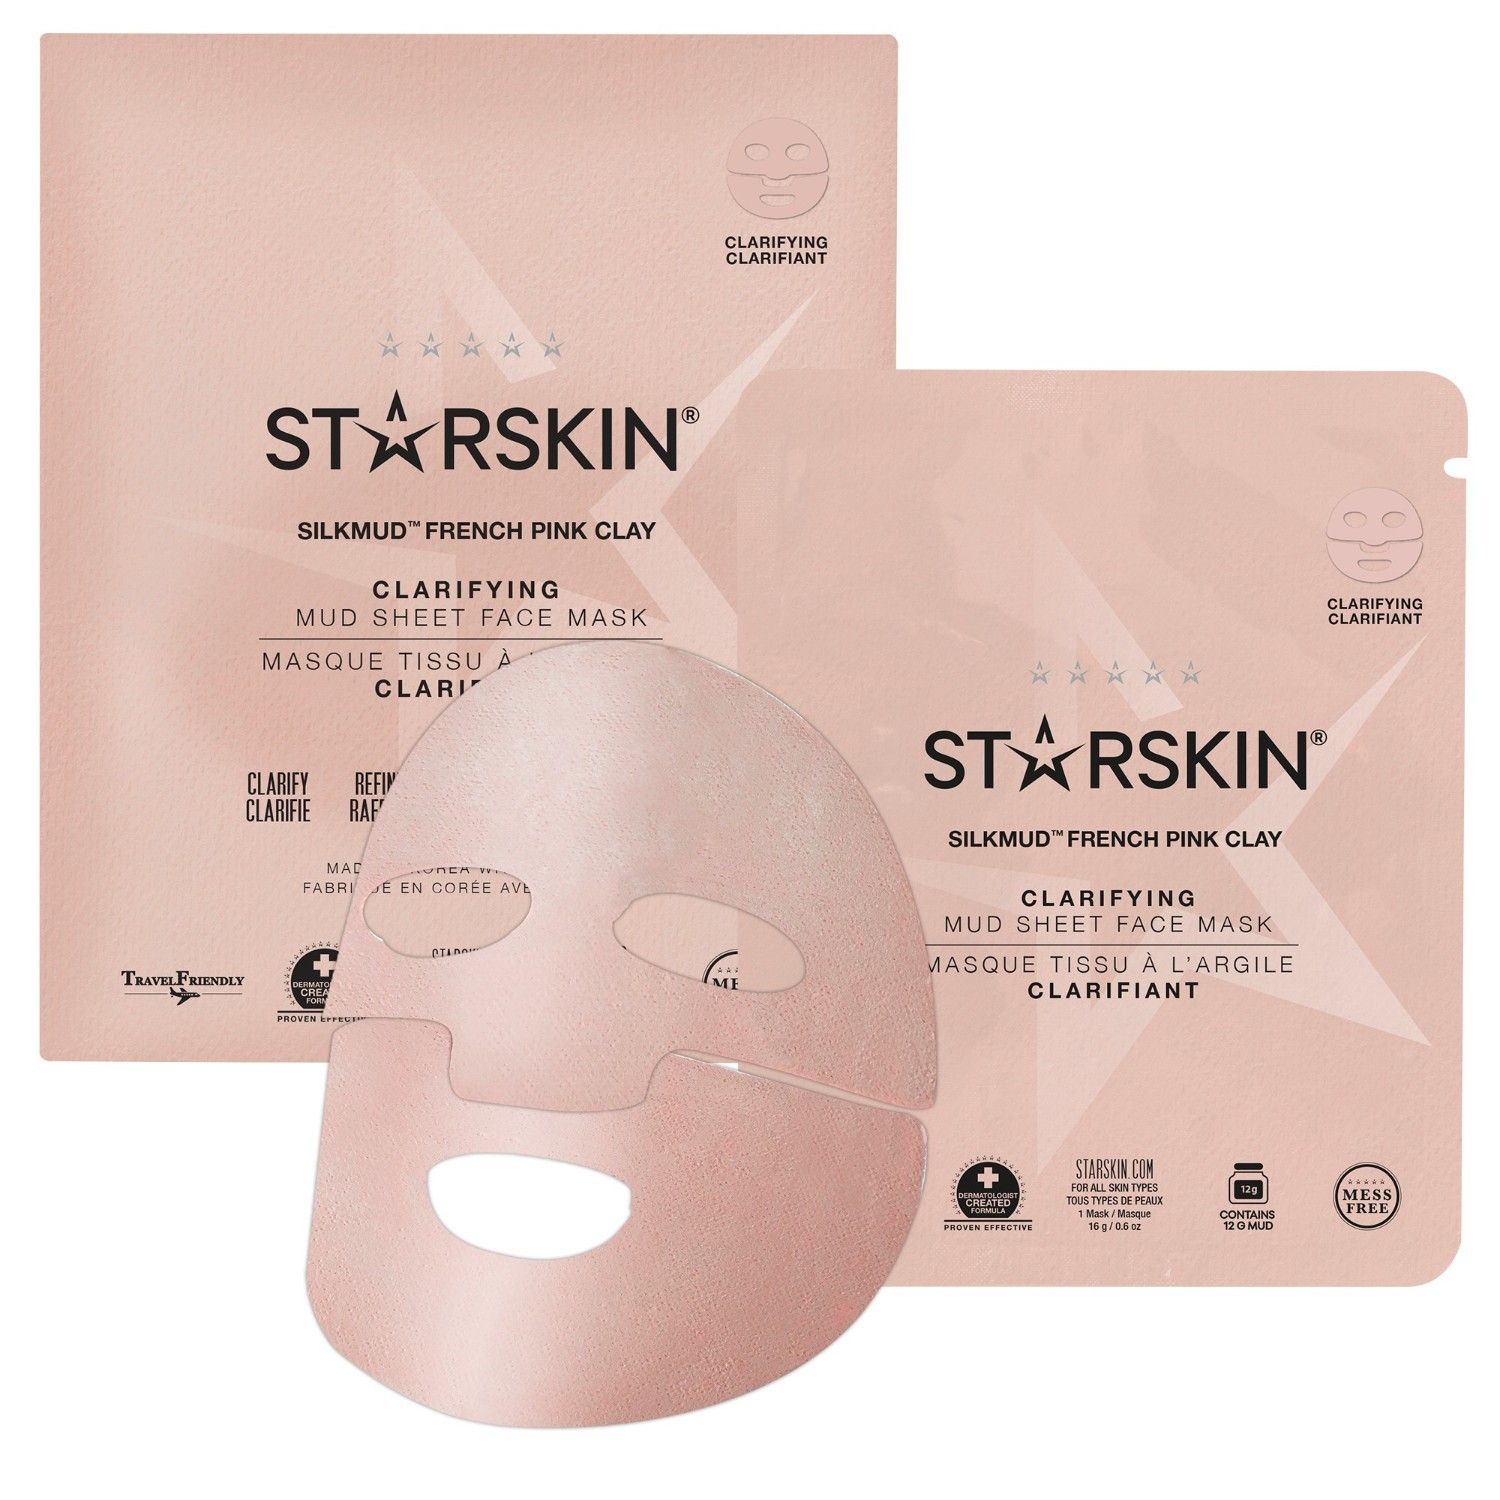 Gesichtsmaske - Silkmud French Pink Clay - Clarifying Mud Sheet Face Mask